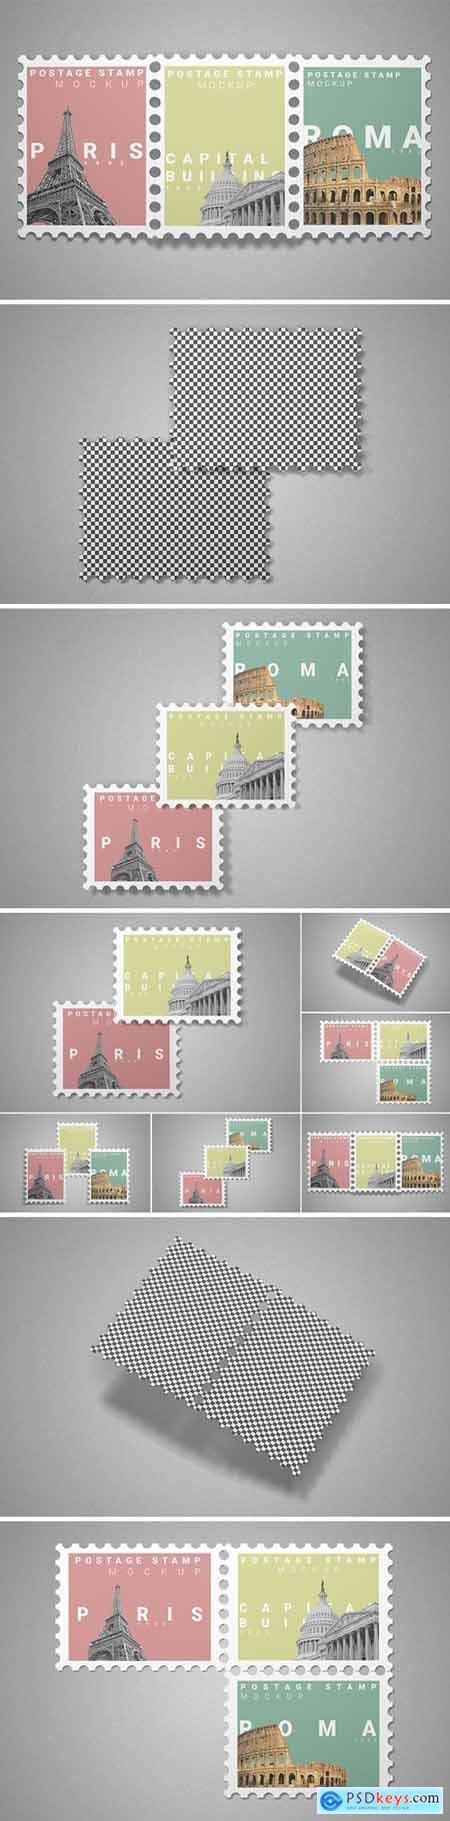 Postage Stamp Mockup 10 PSD Files